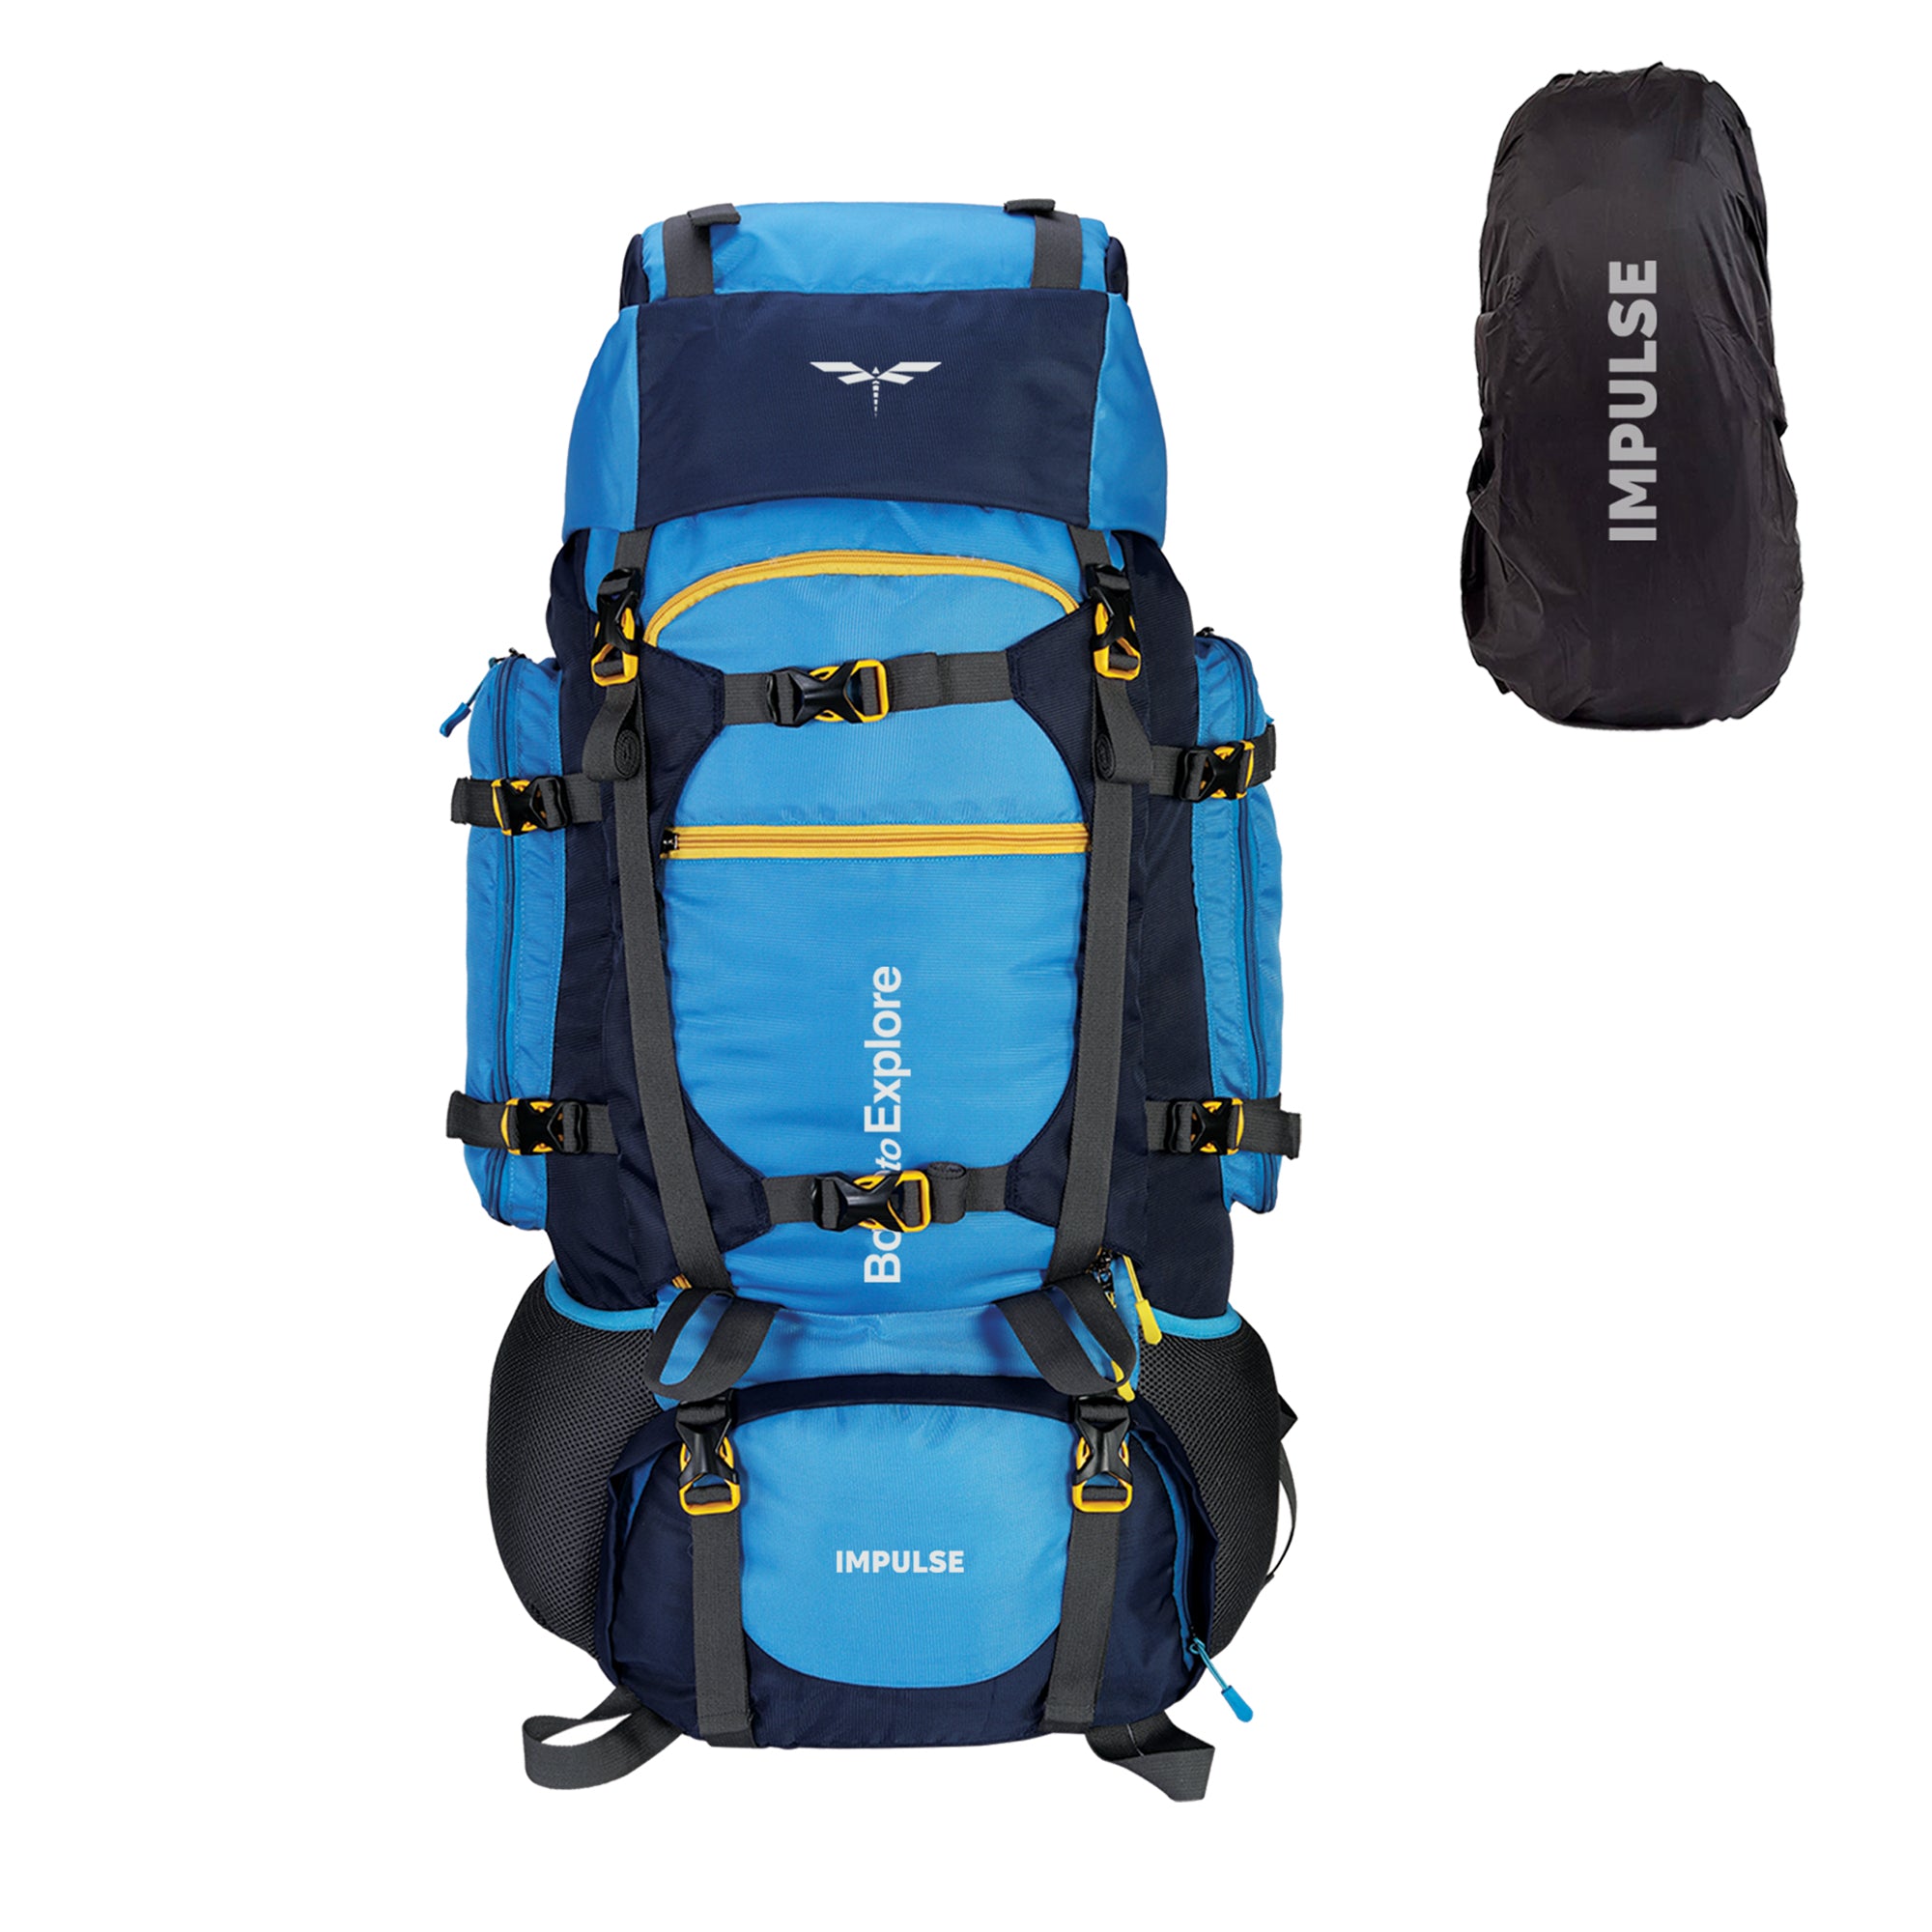 Trekking bag - Sports Equipment - 1763769588